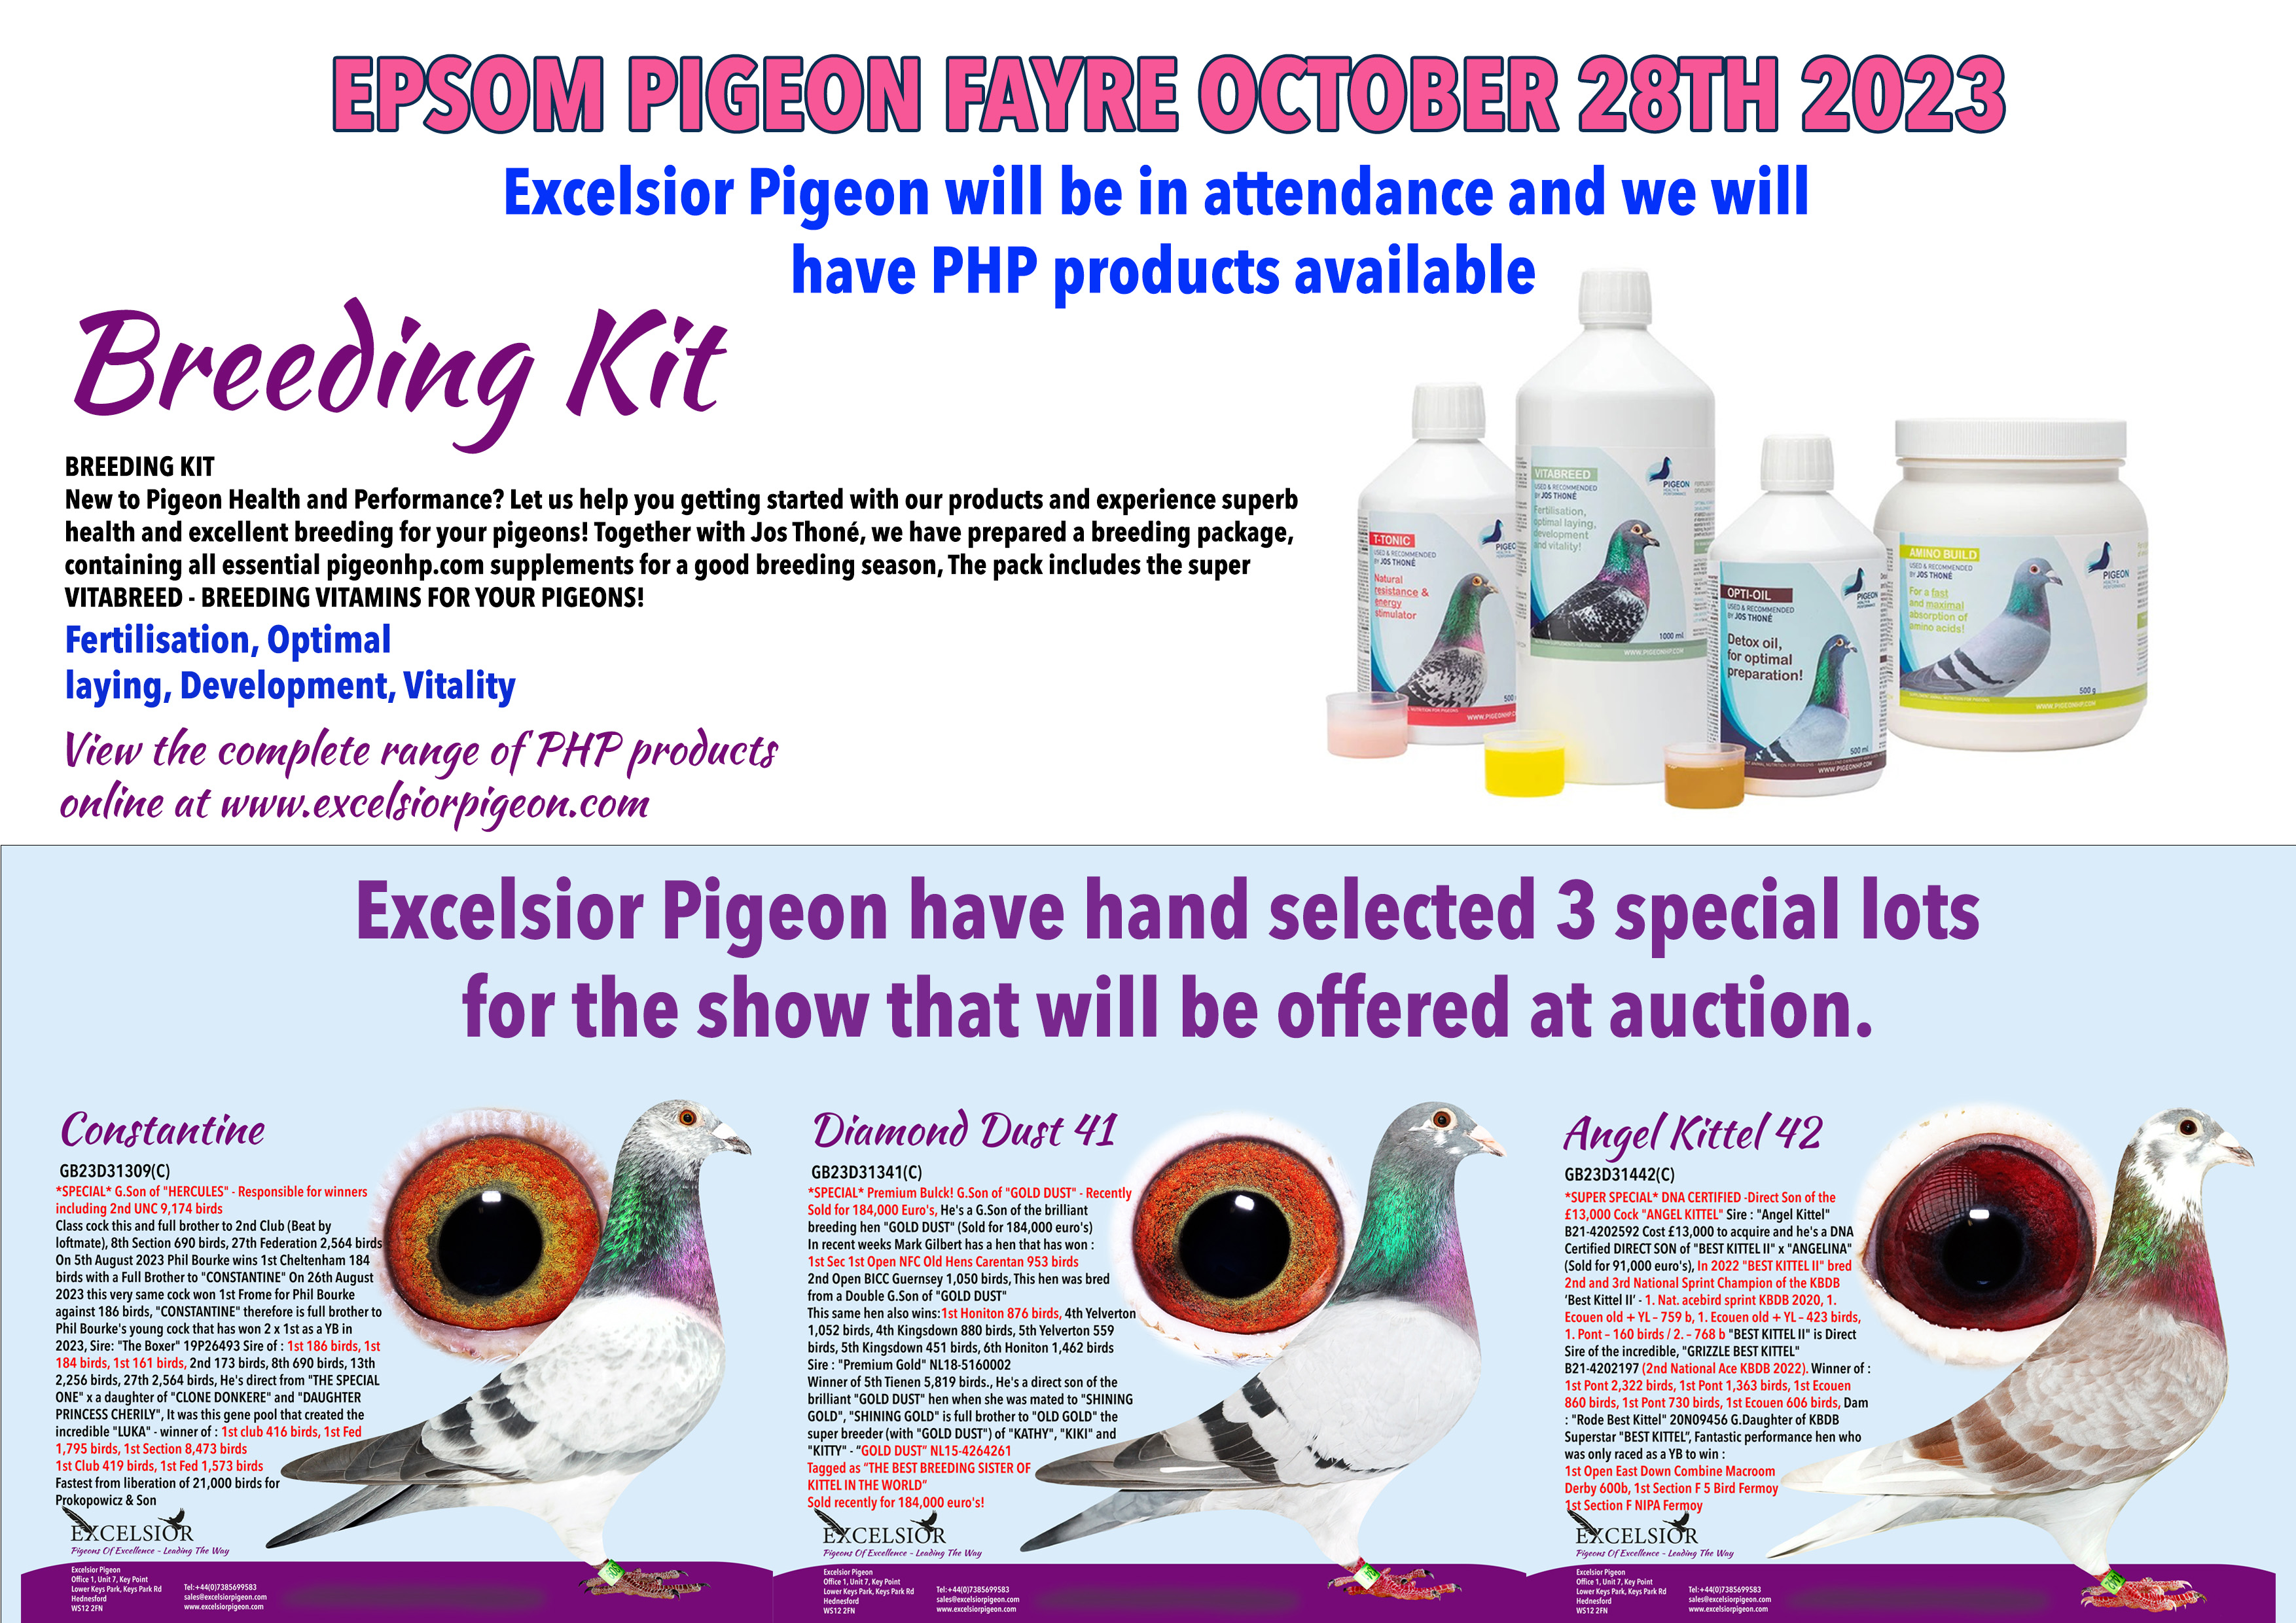 EPSOM PIGEON FAYRE OCTOBER 28TH 2023